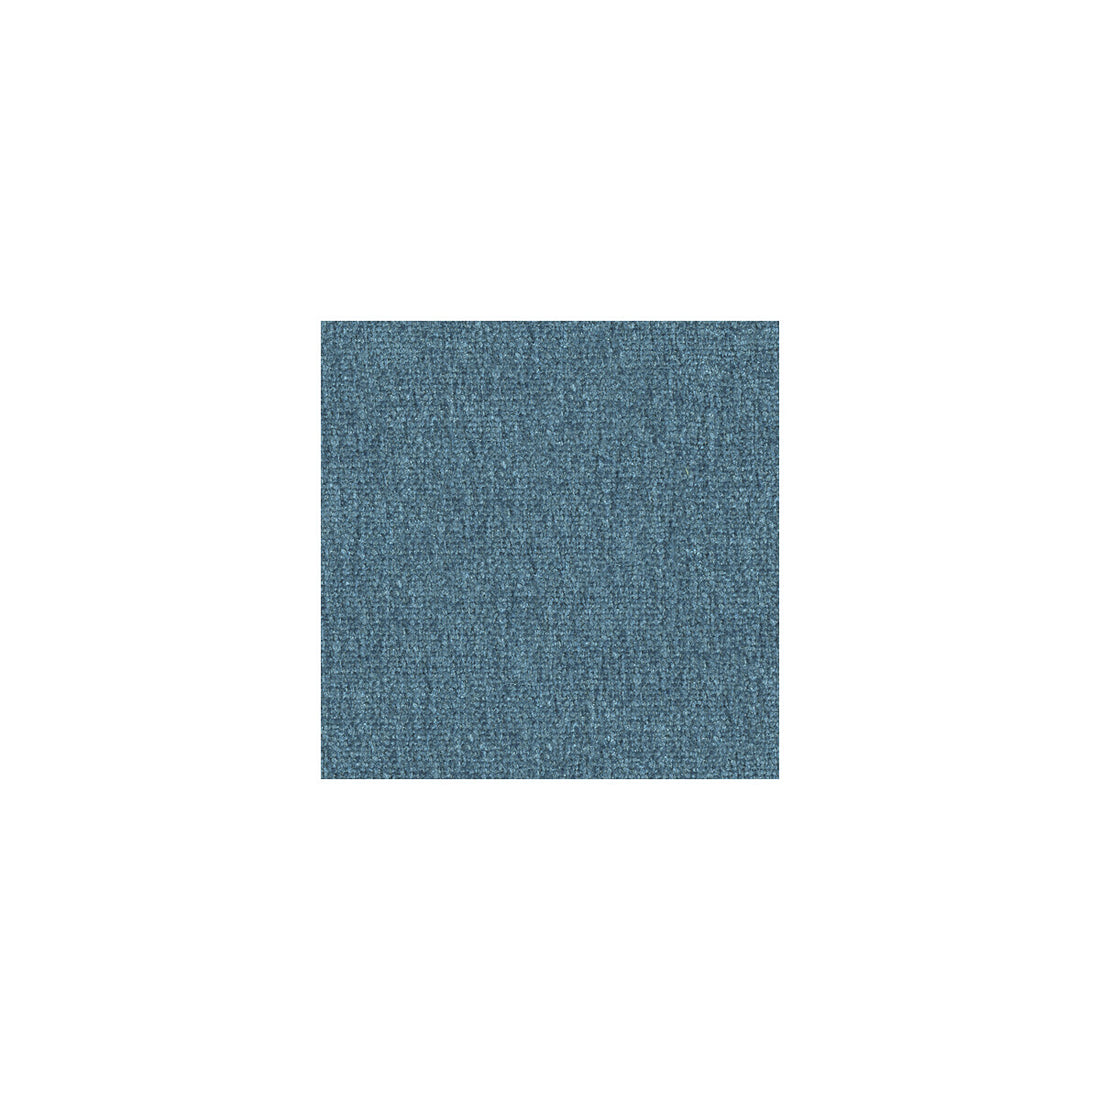 Kravet Smart fabric in 30992-5 color - pattern 30992.5.0 - by Kravet Smart